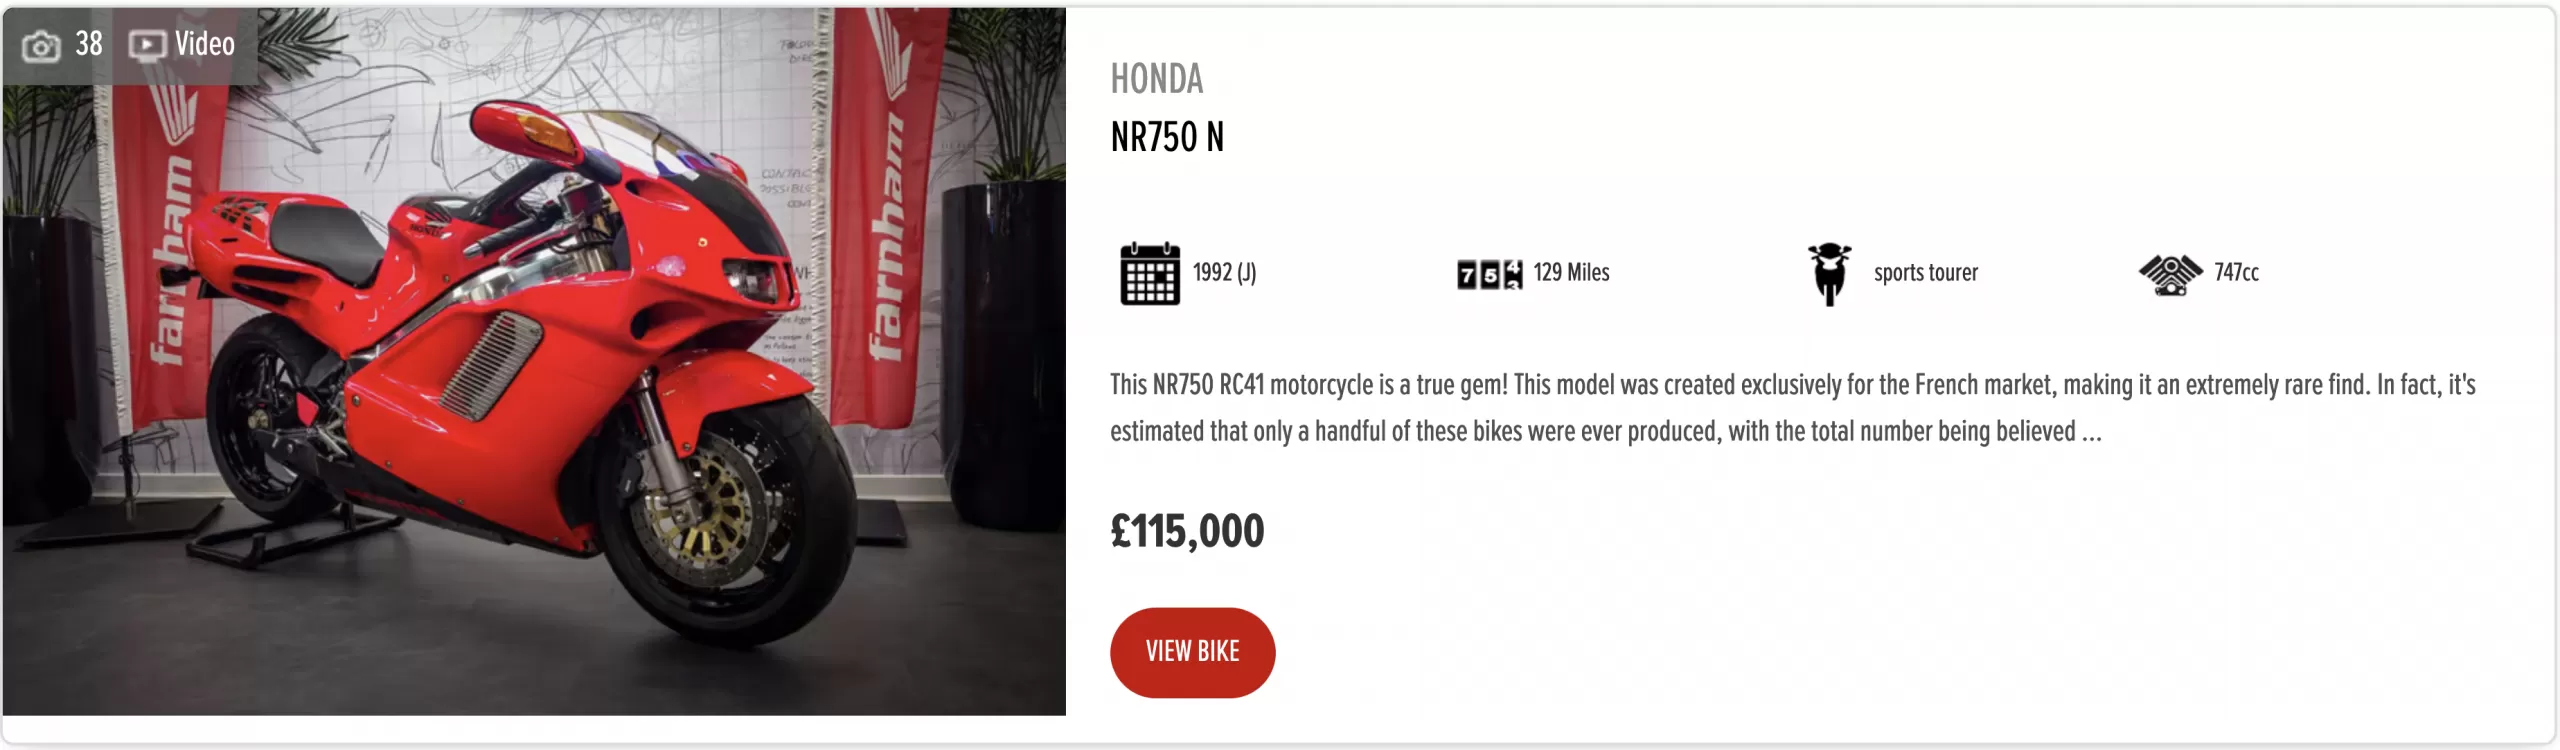 Honda NR750 For Sale in Farnham, Surrey